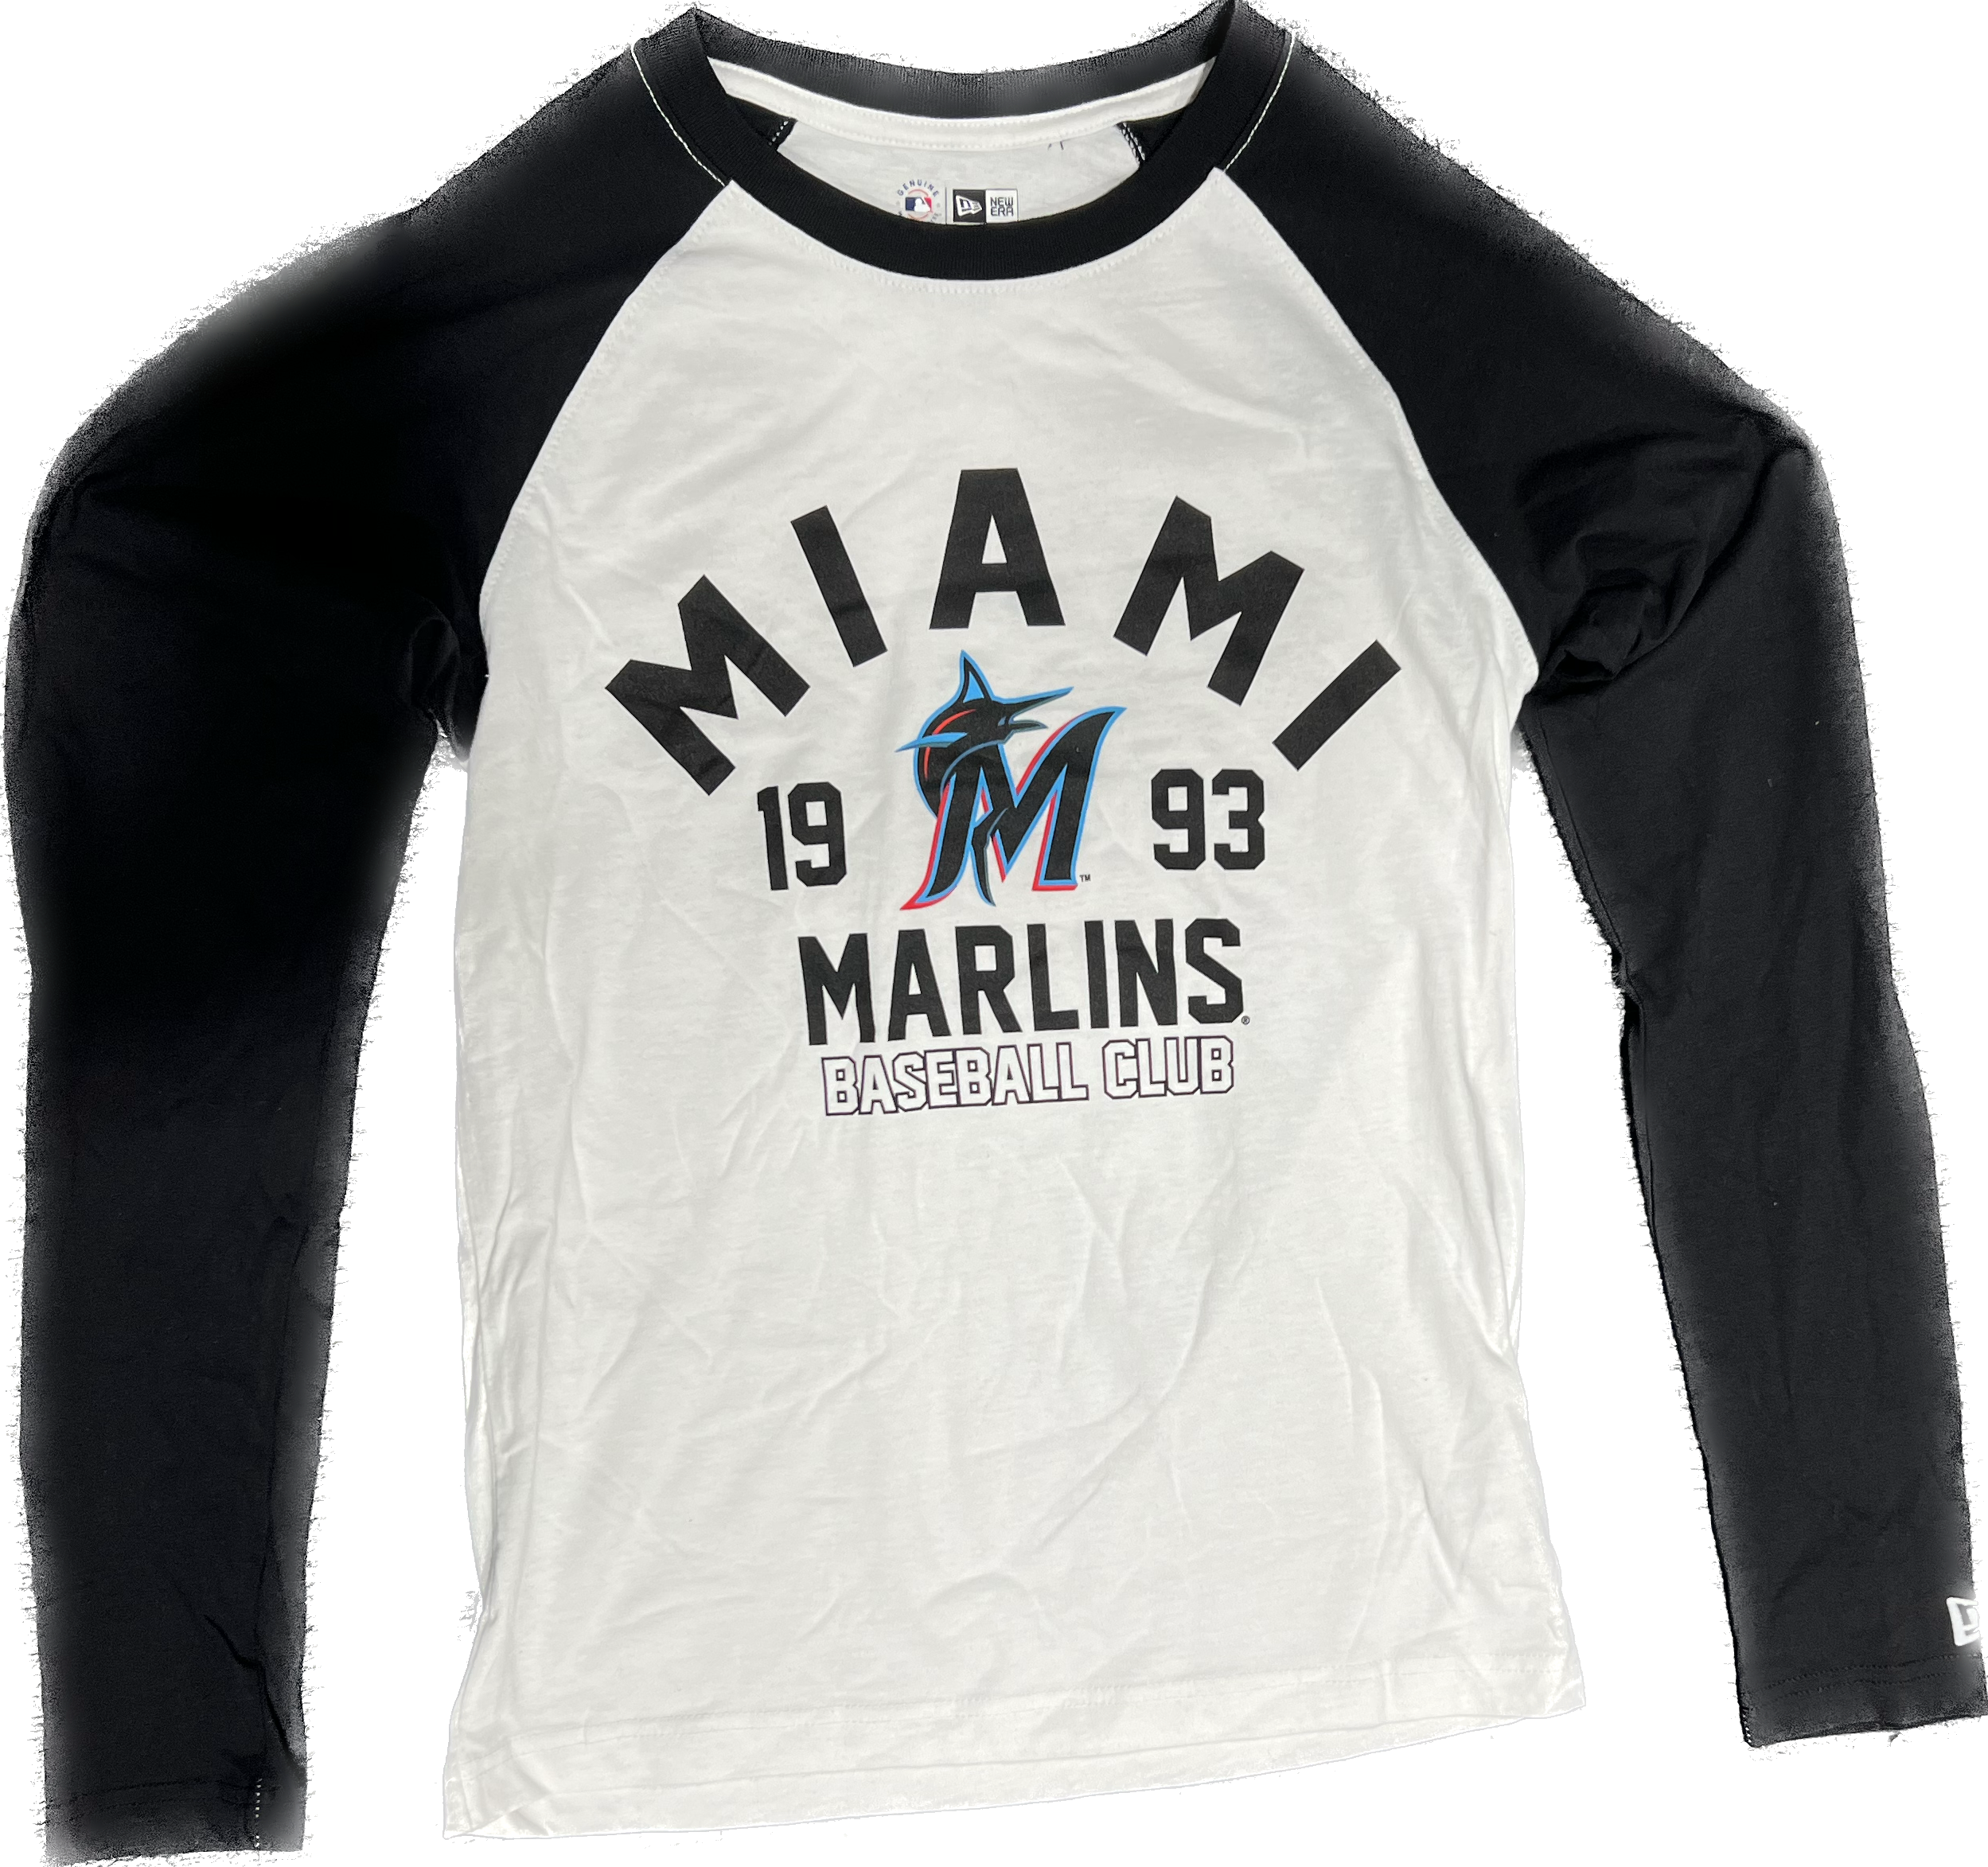 Miami Marlins New Era Baseball Club Est 1993 Raglan Shirt - White/Black